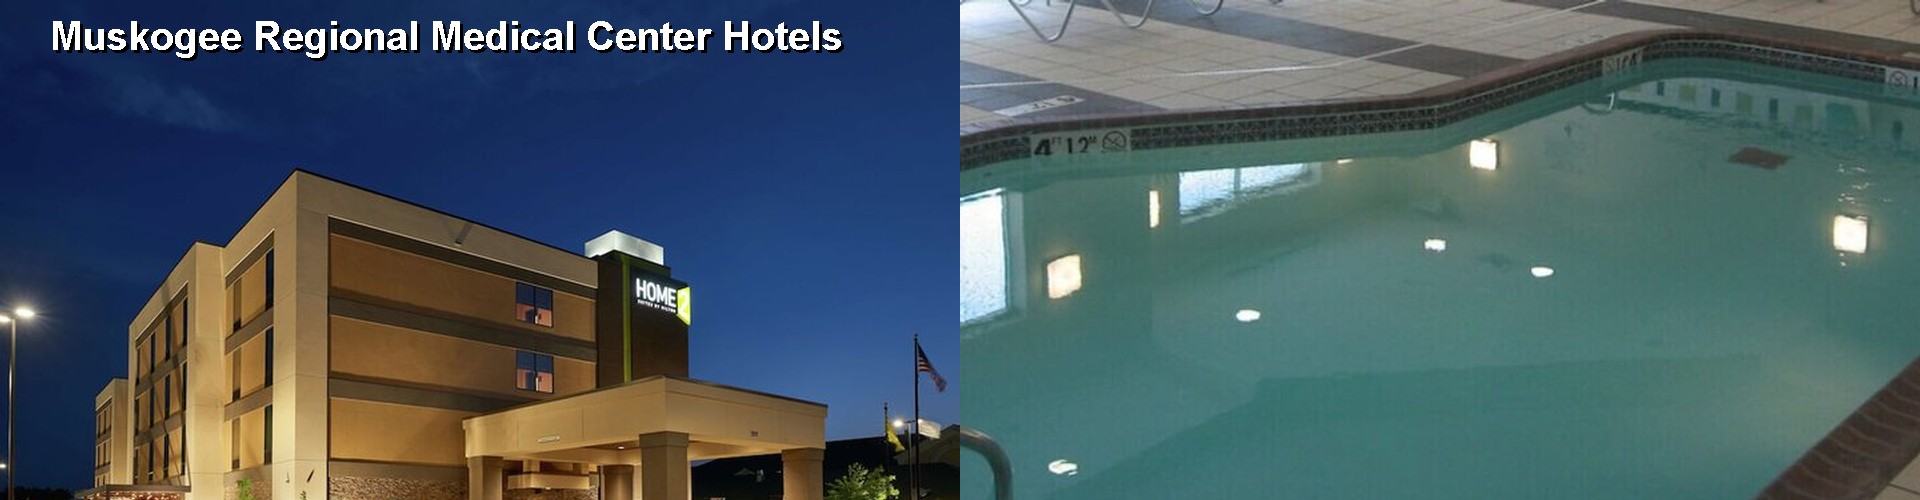 4 Best Hotels near Muskogee Regional Medical Center